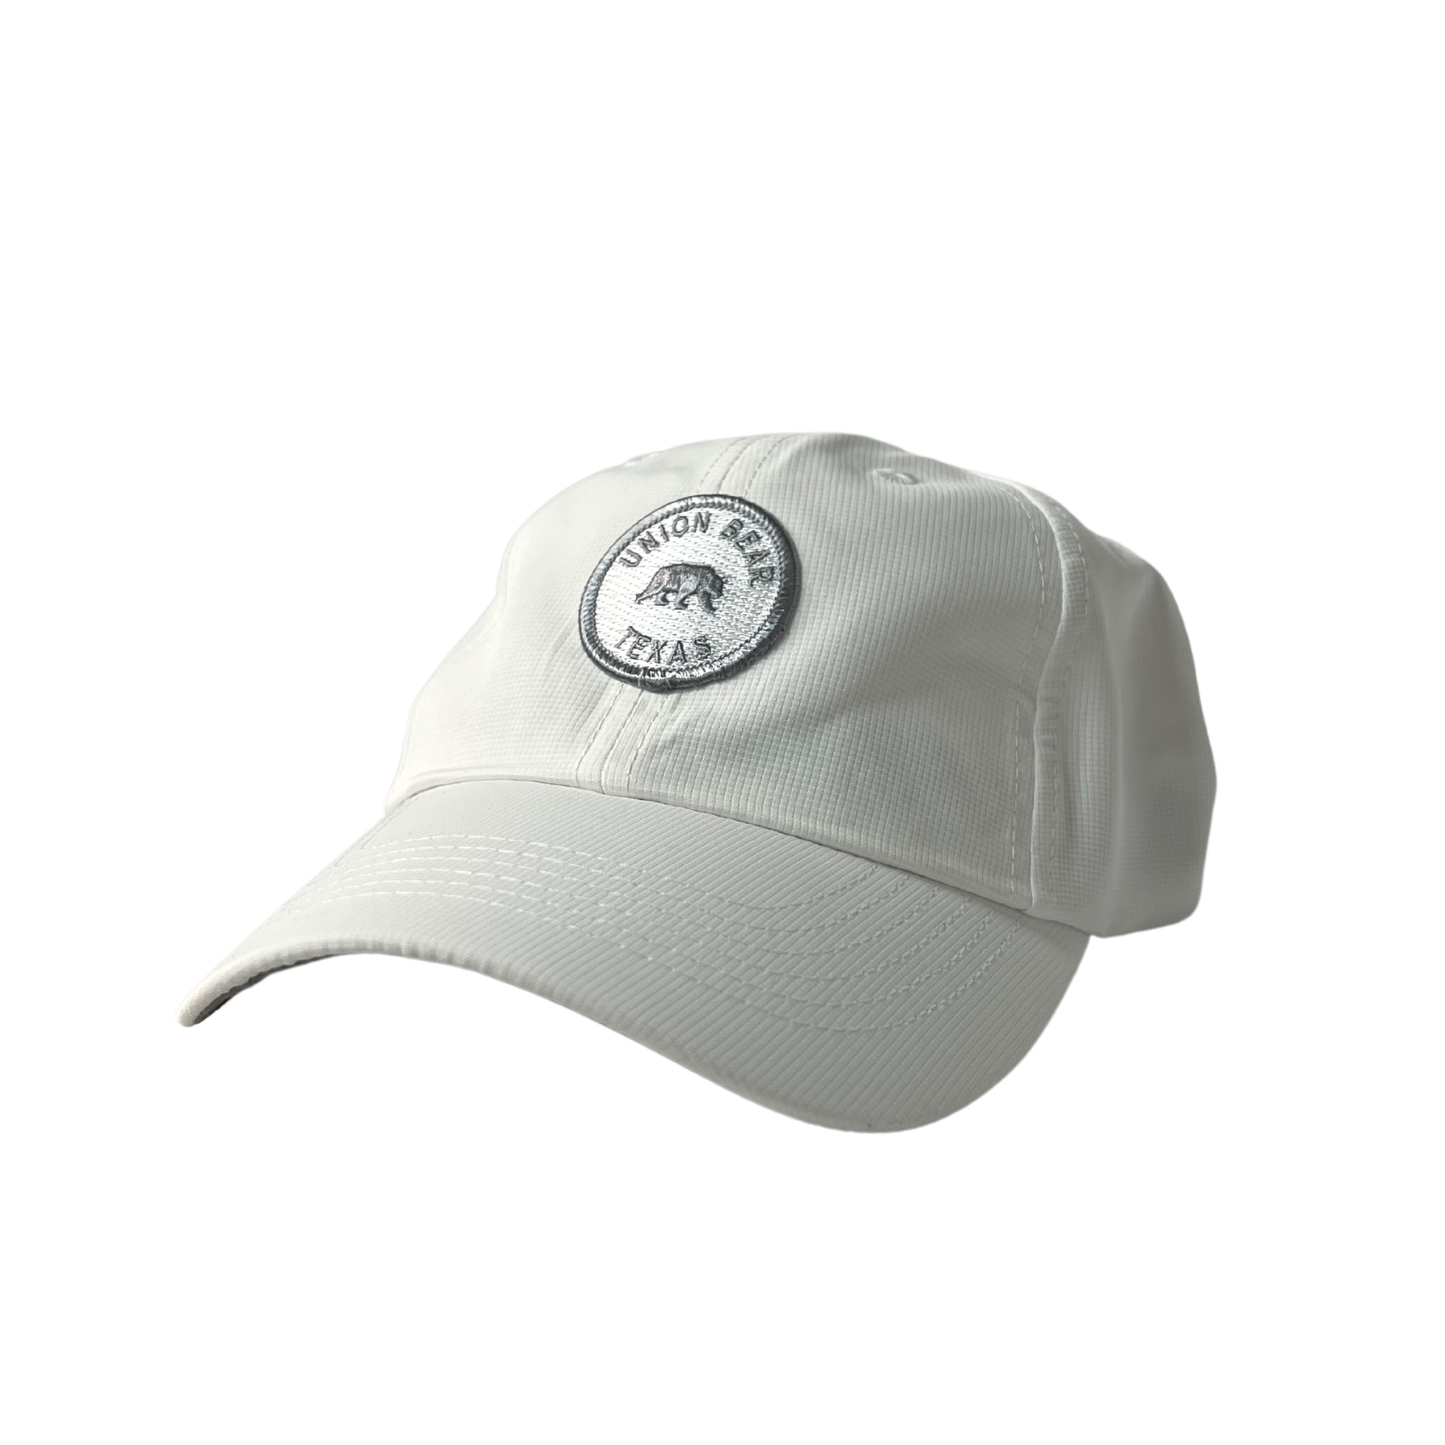 Union Bear Texas Patch Hat - White